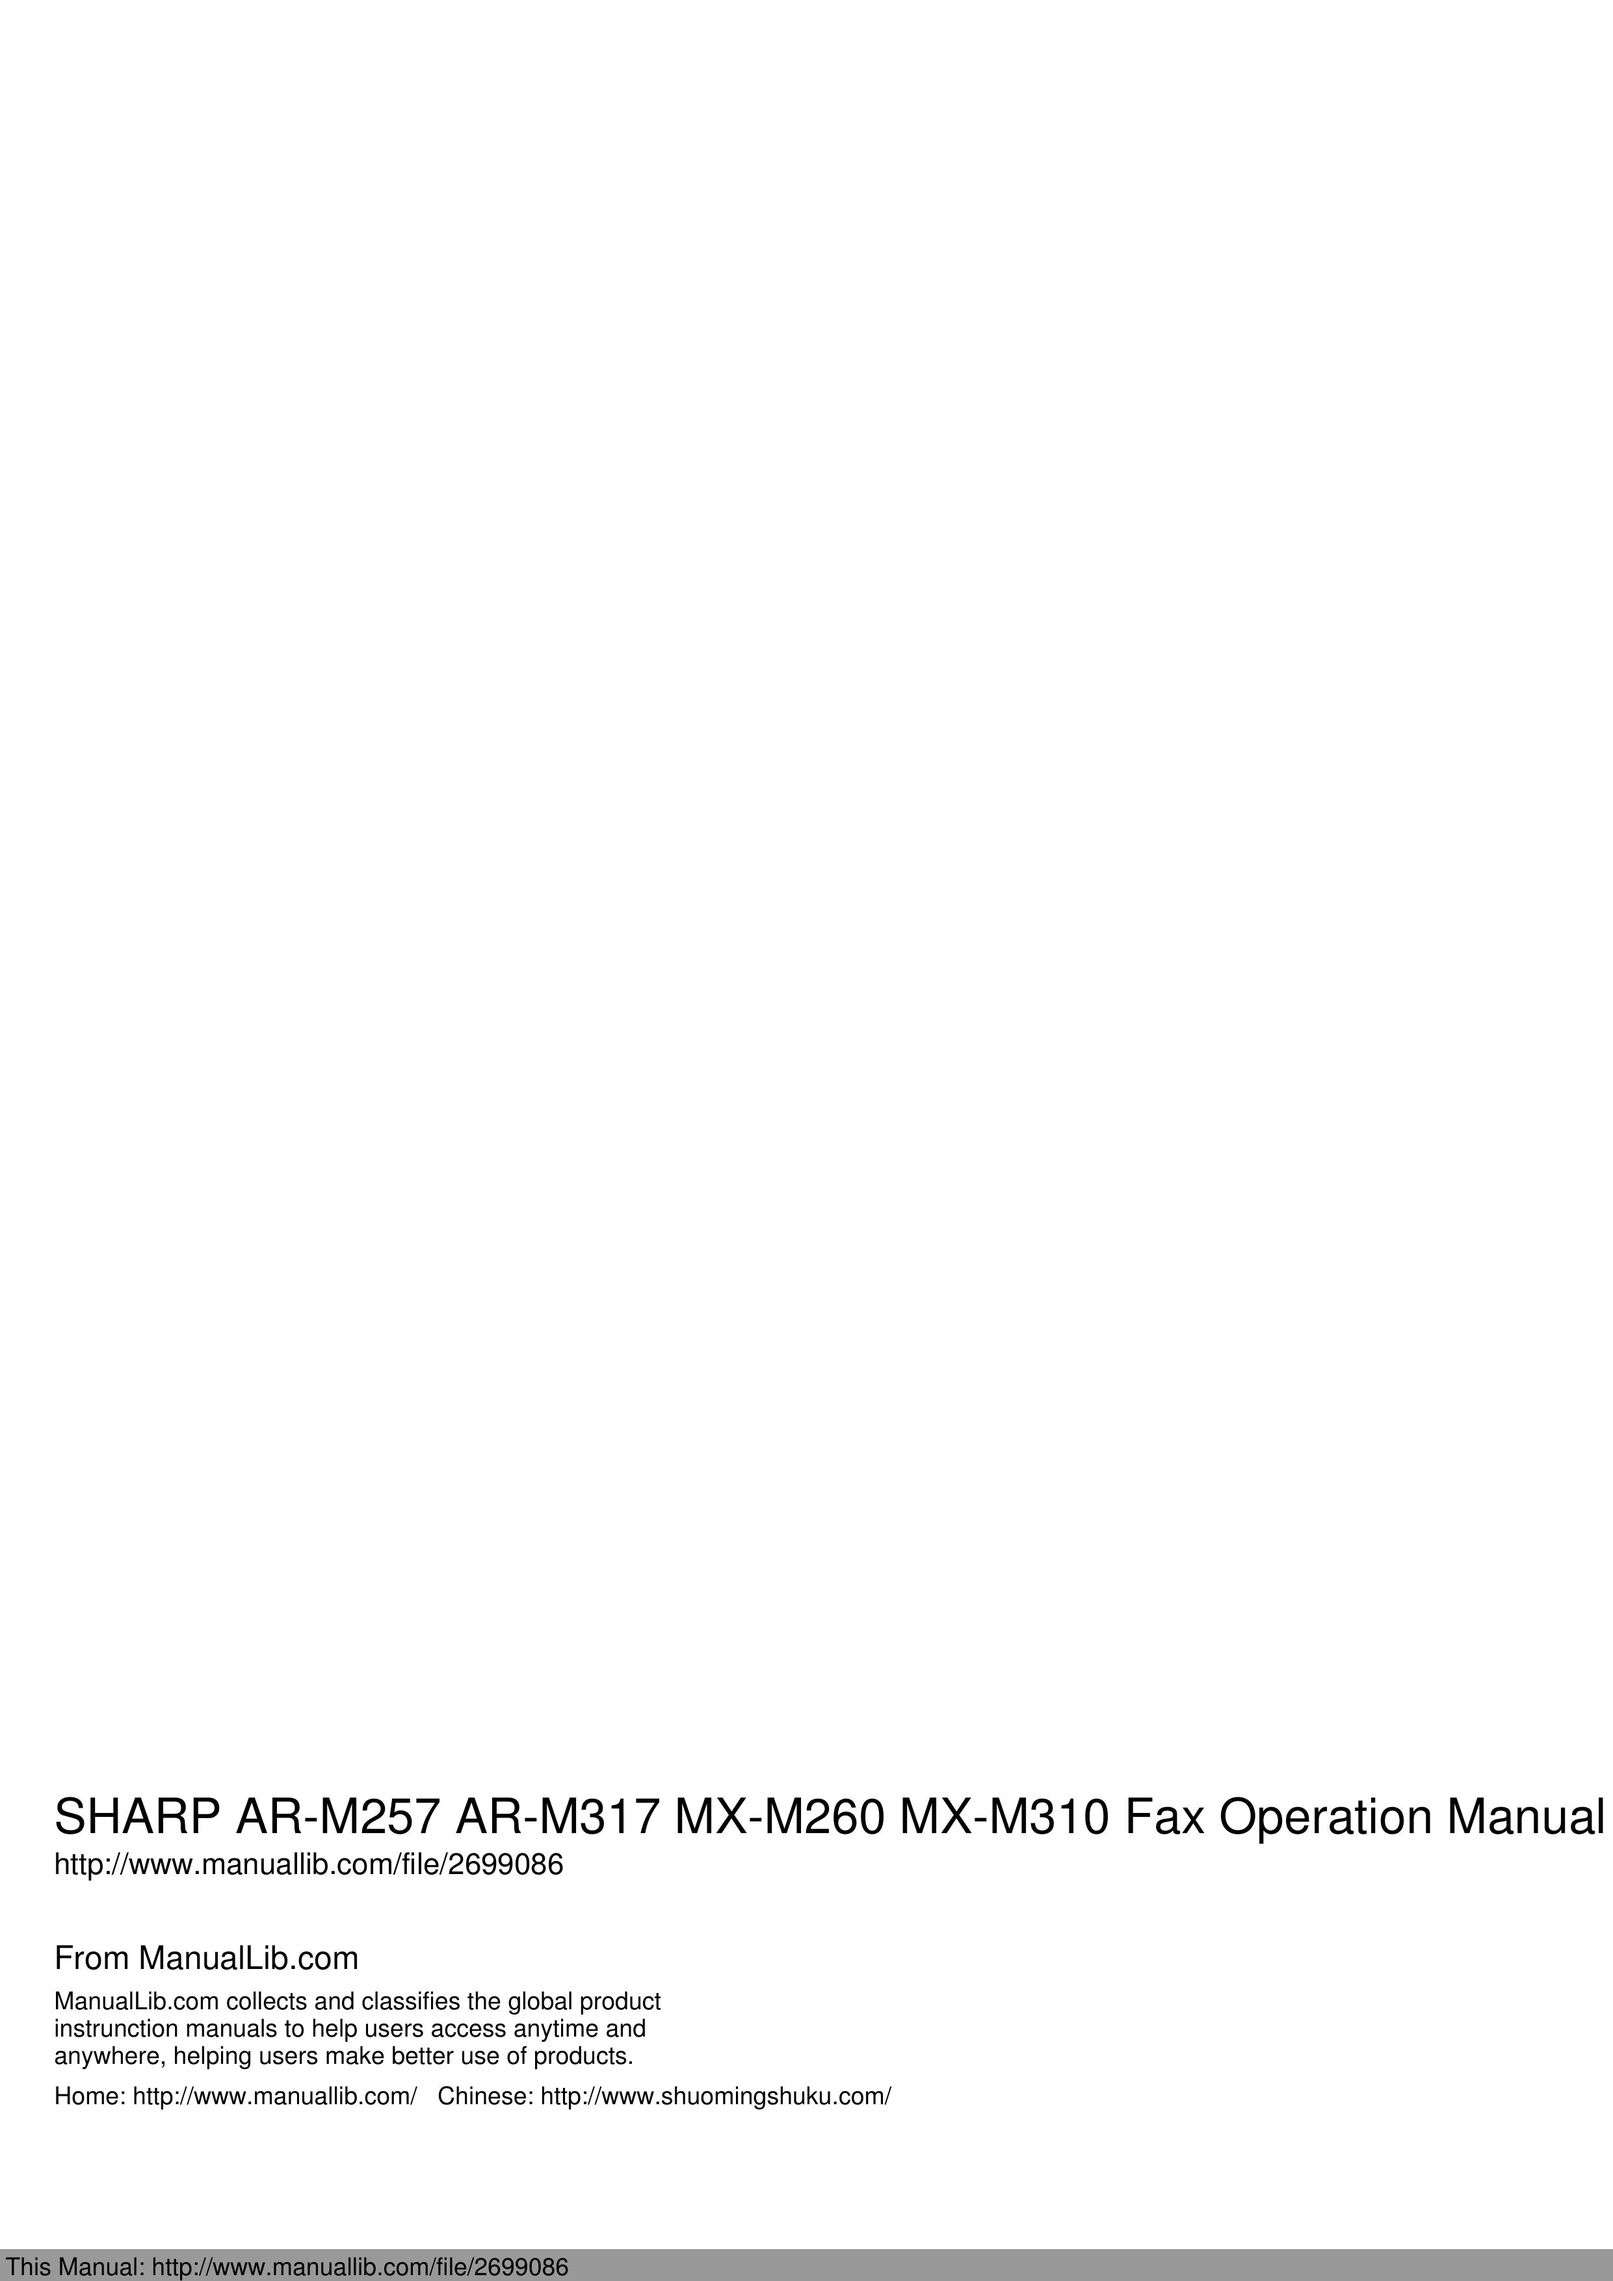 Sharp AR-M257 Scanner User Manual